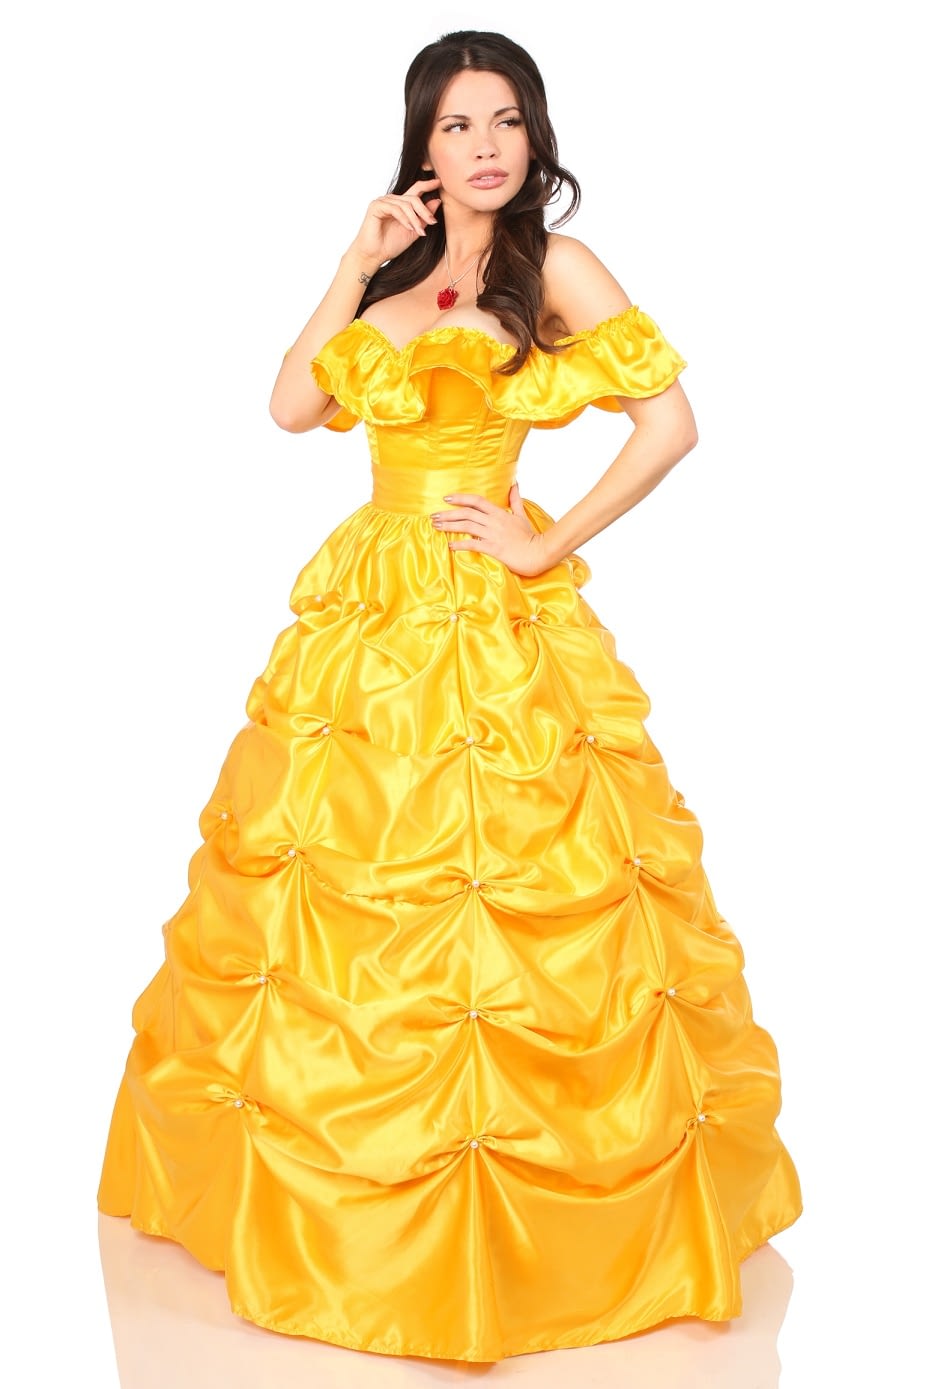 Beauty Princess Corset Costume - The BDSM Toy Shop